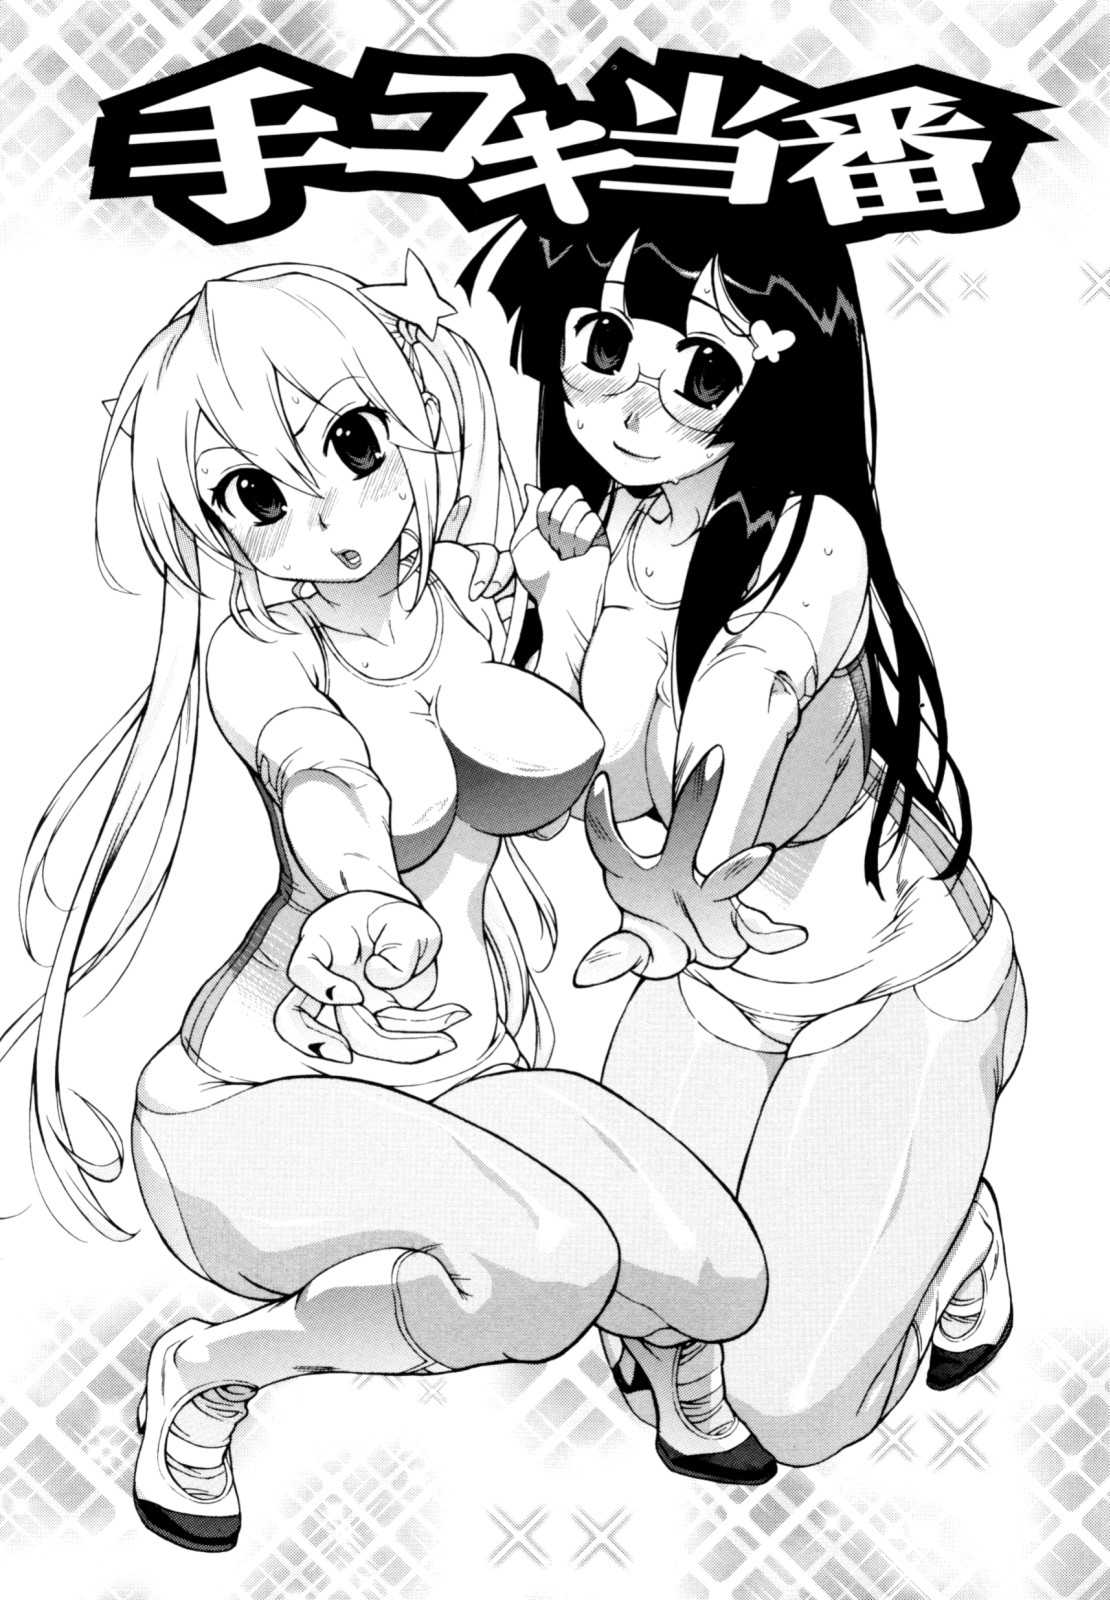 (Adult Manga) [Kishinosato Satoshi] Teka Pita 